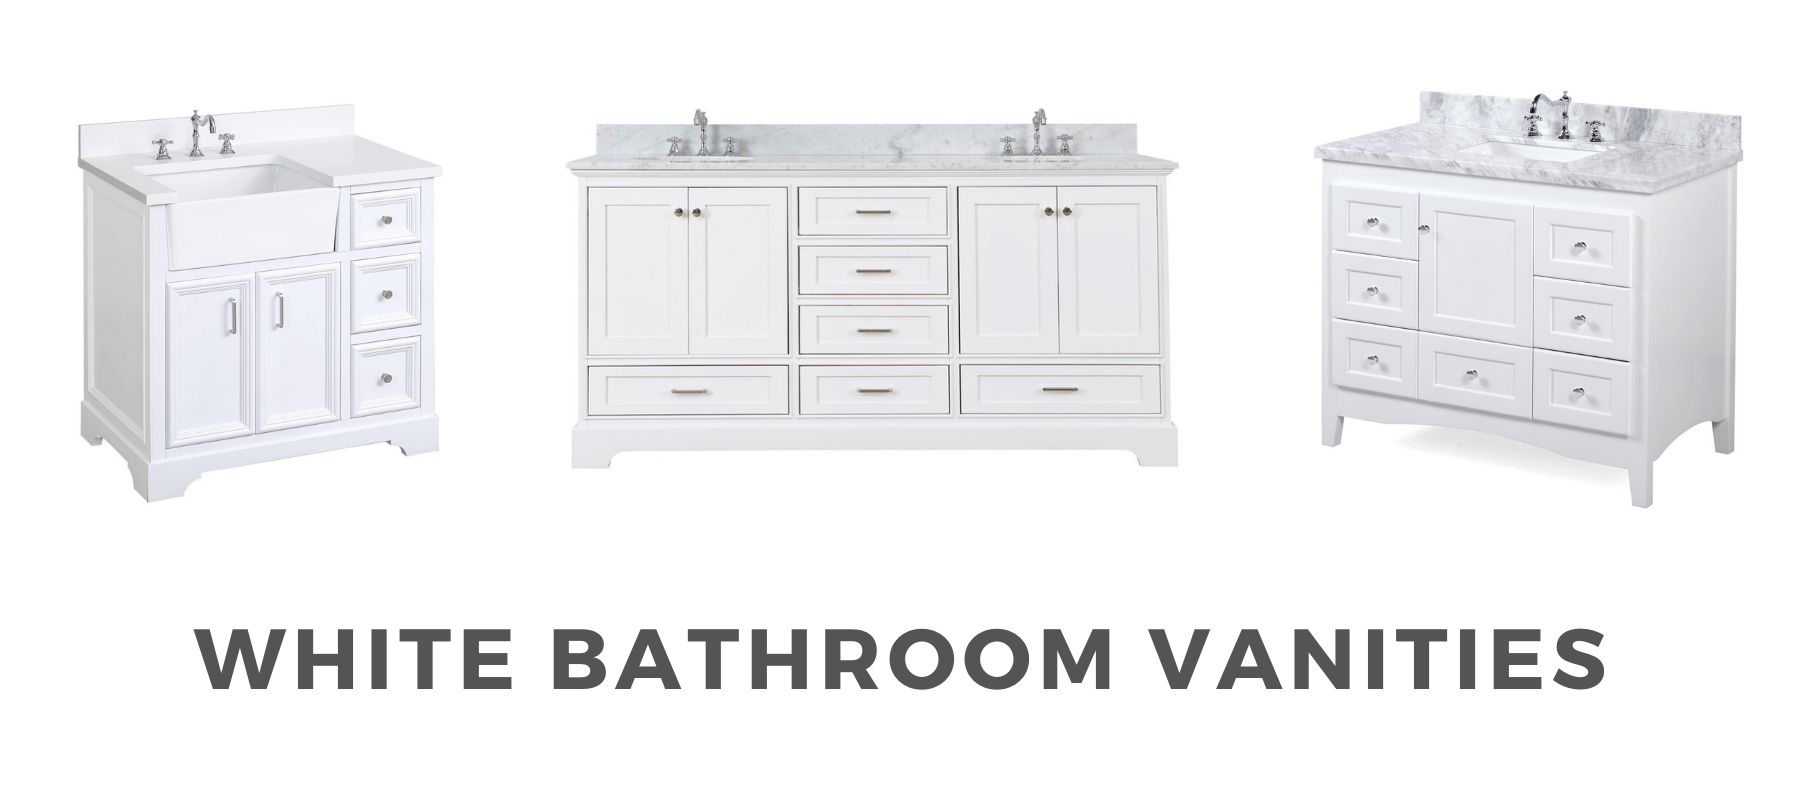 Most Popular Bathroom Vanity Color White